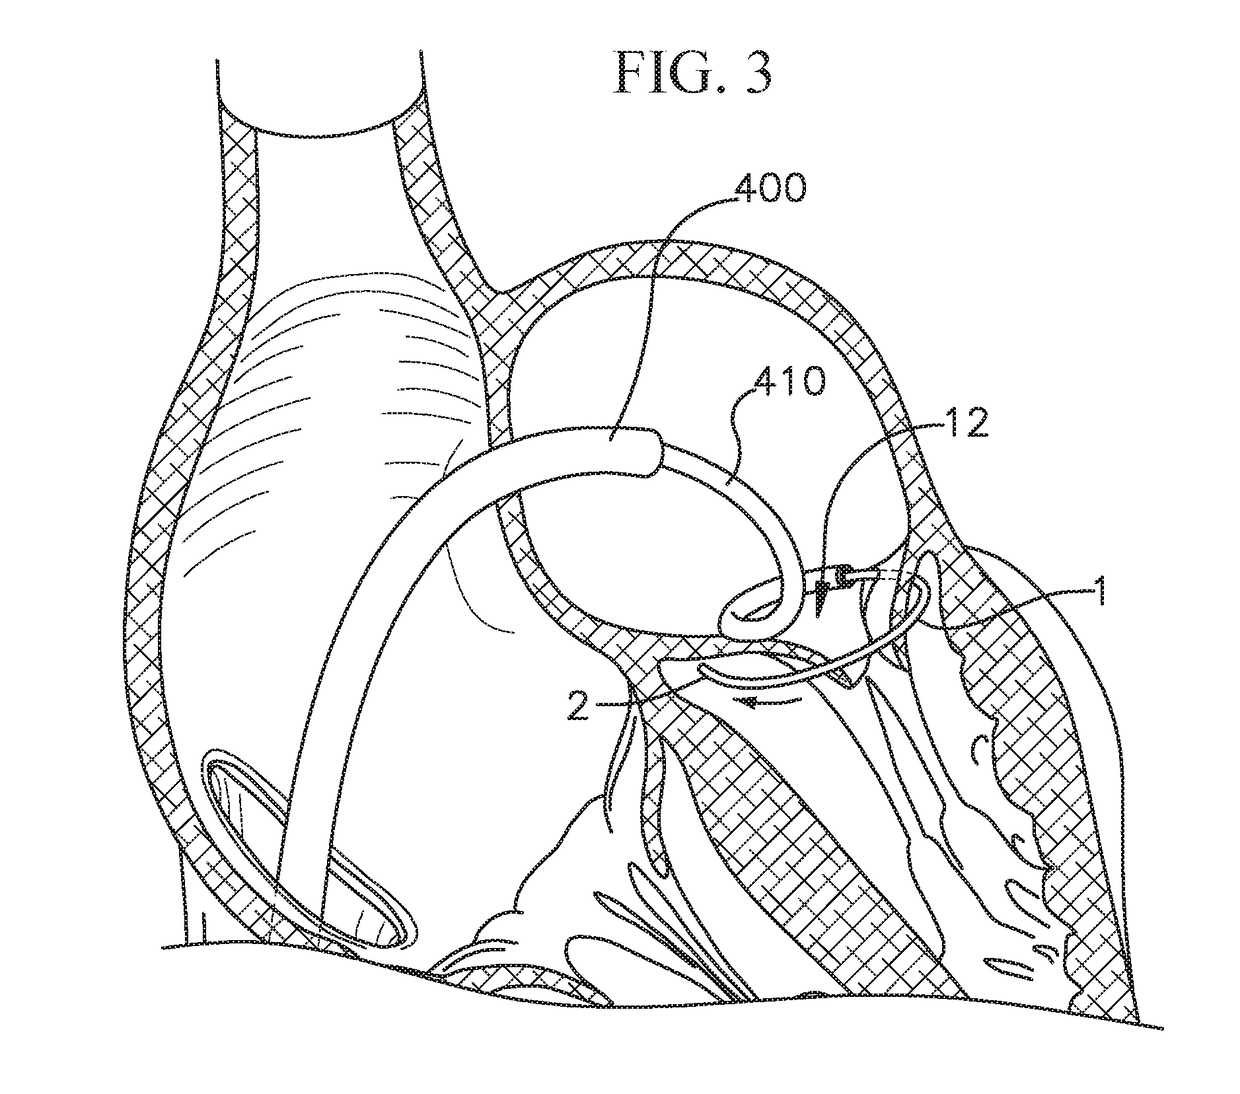 Heart valve docking system